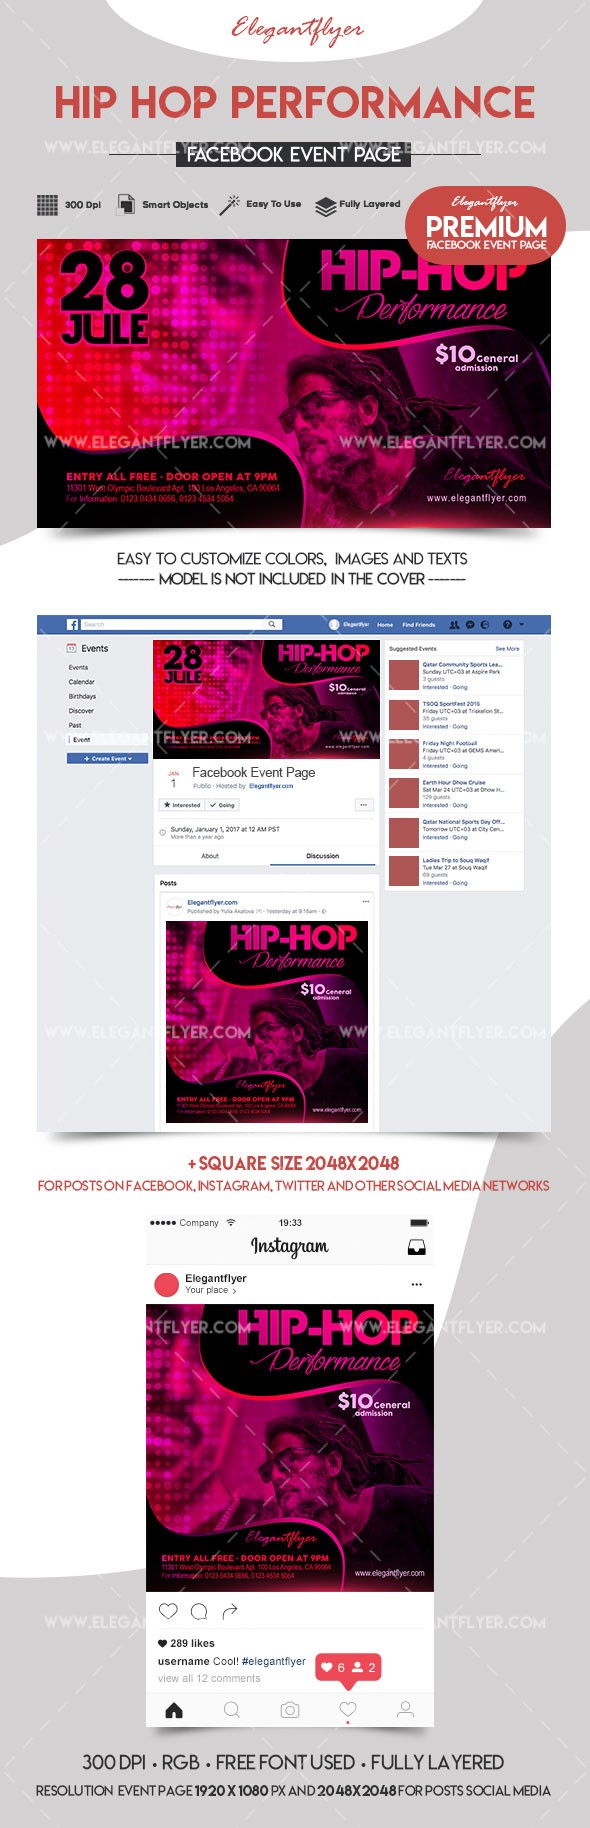 Hip Hop Performance Facebook by ElegantFlyer